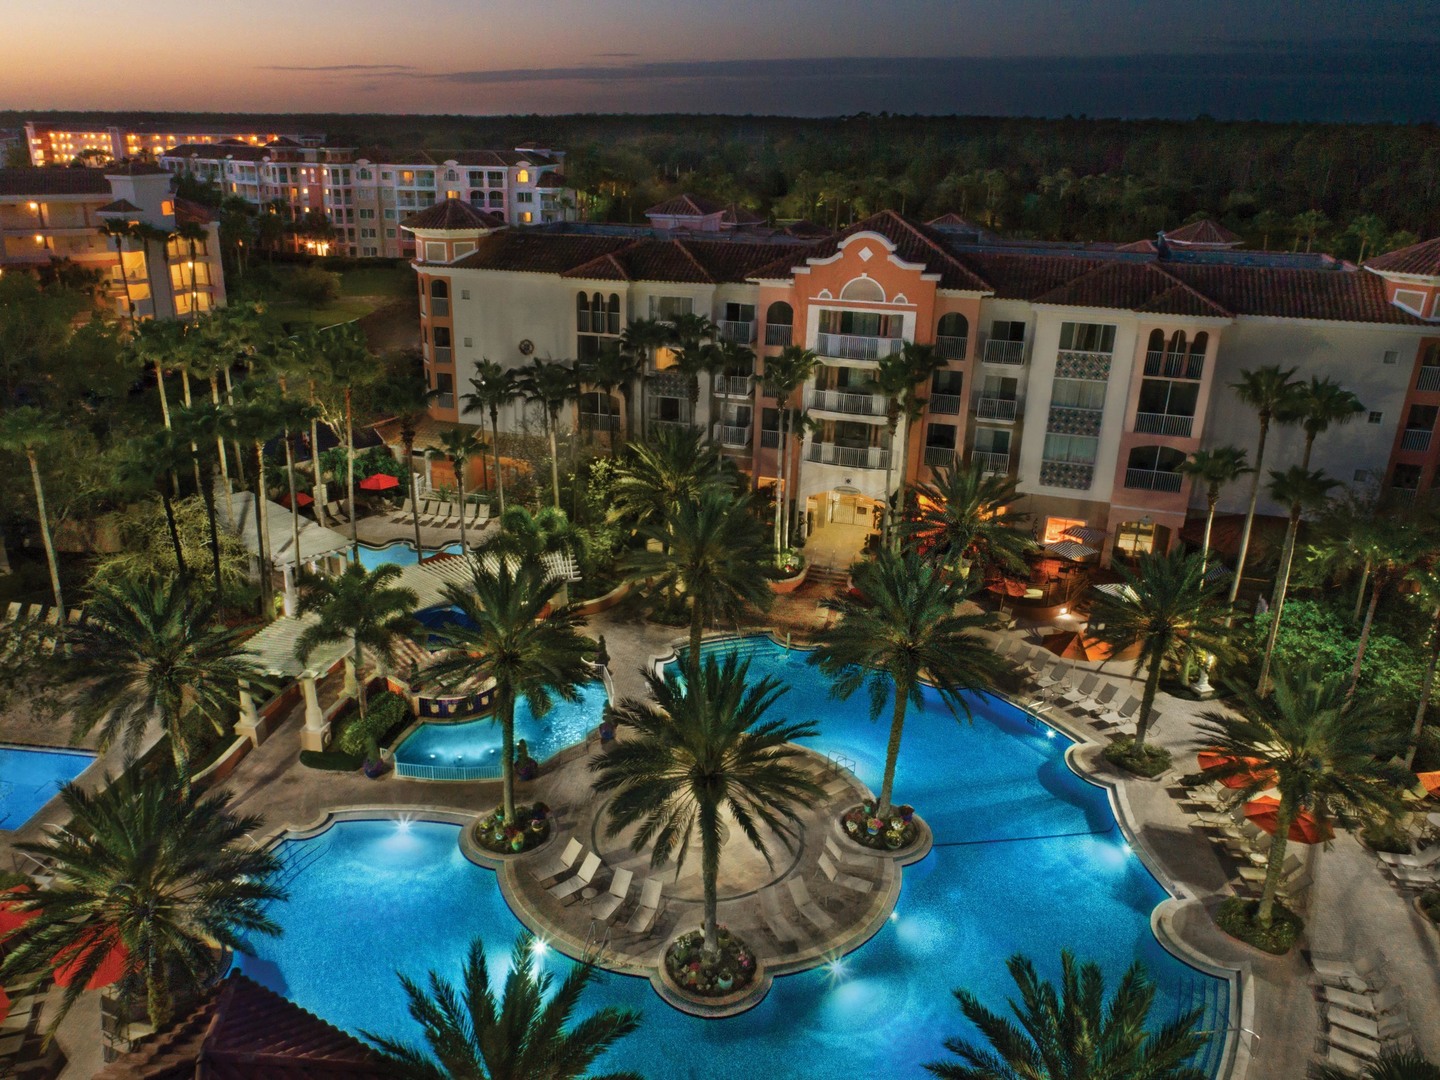 Marriott's Grande Vista Village Center Pool/Aerial View. Marriott's Grande Vista is located in Orlando, Florida United States.